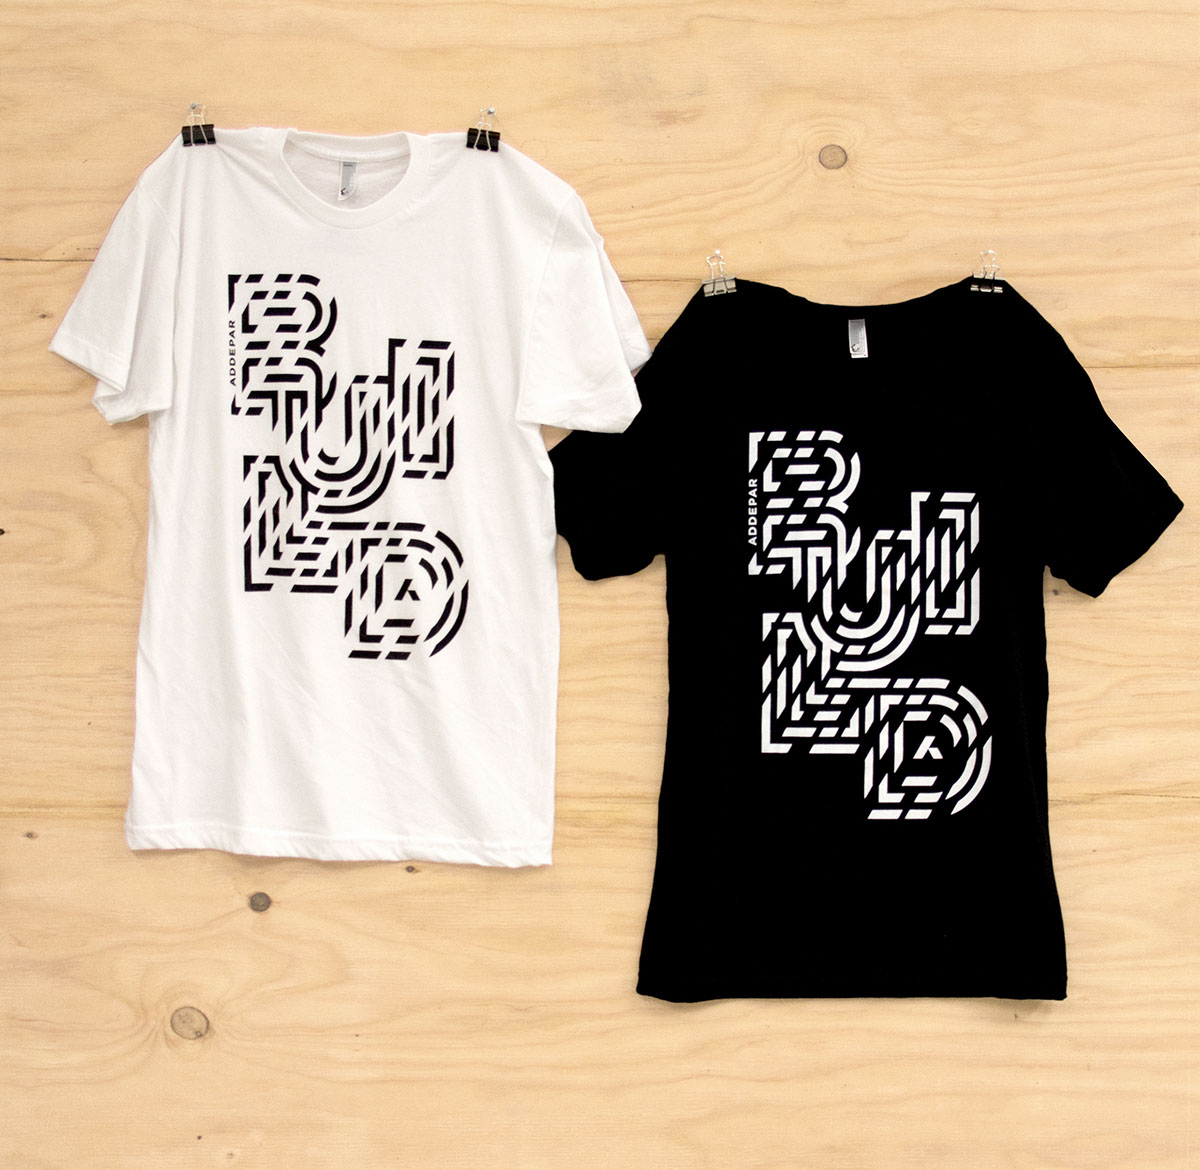 build addepar design shirt tshirt t-shirt apparel Recruiting Startup tech lettering type black White newsprint